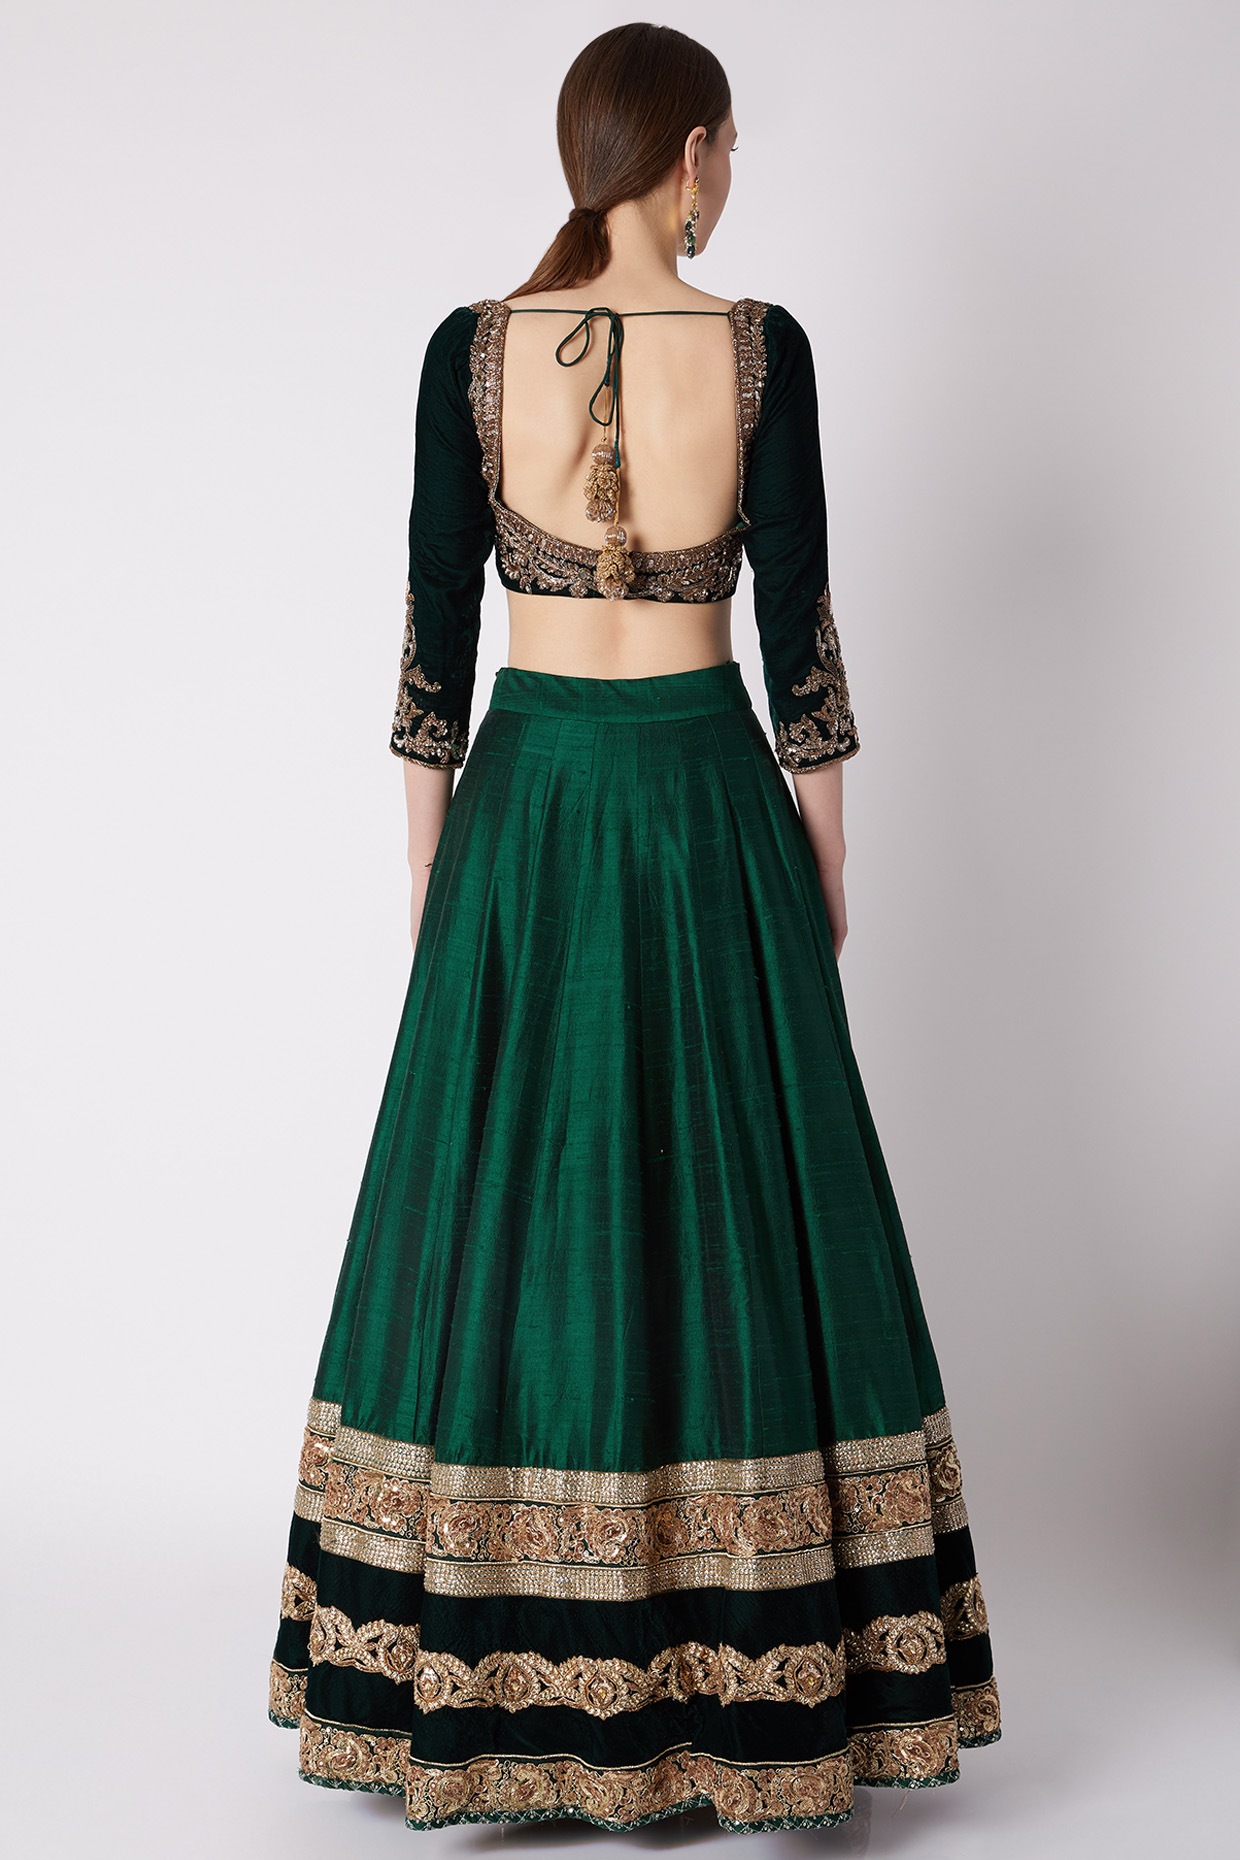 Green Colour Designer Heavy Embroidered Lehenga Choli | Bridal lehenga  collection, Lehenga collection, Designer bridal lehenga